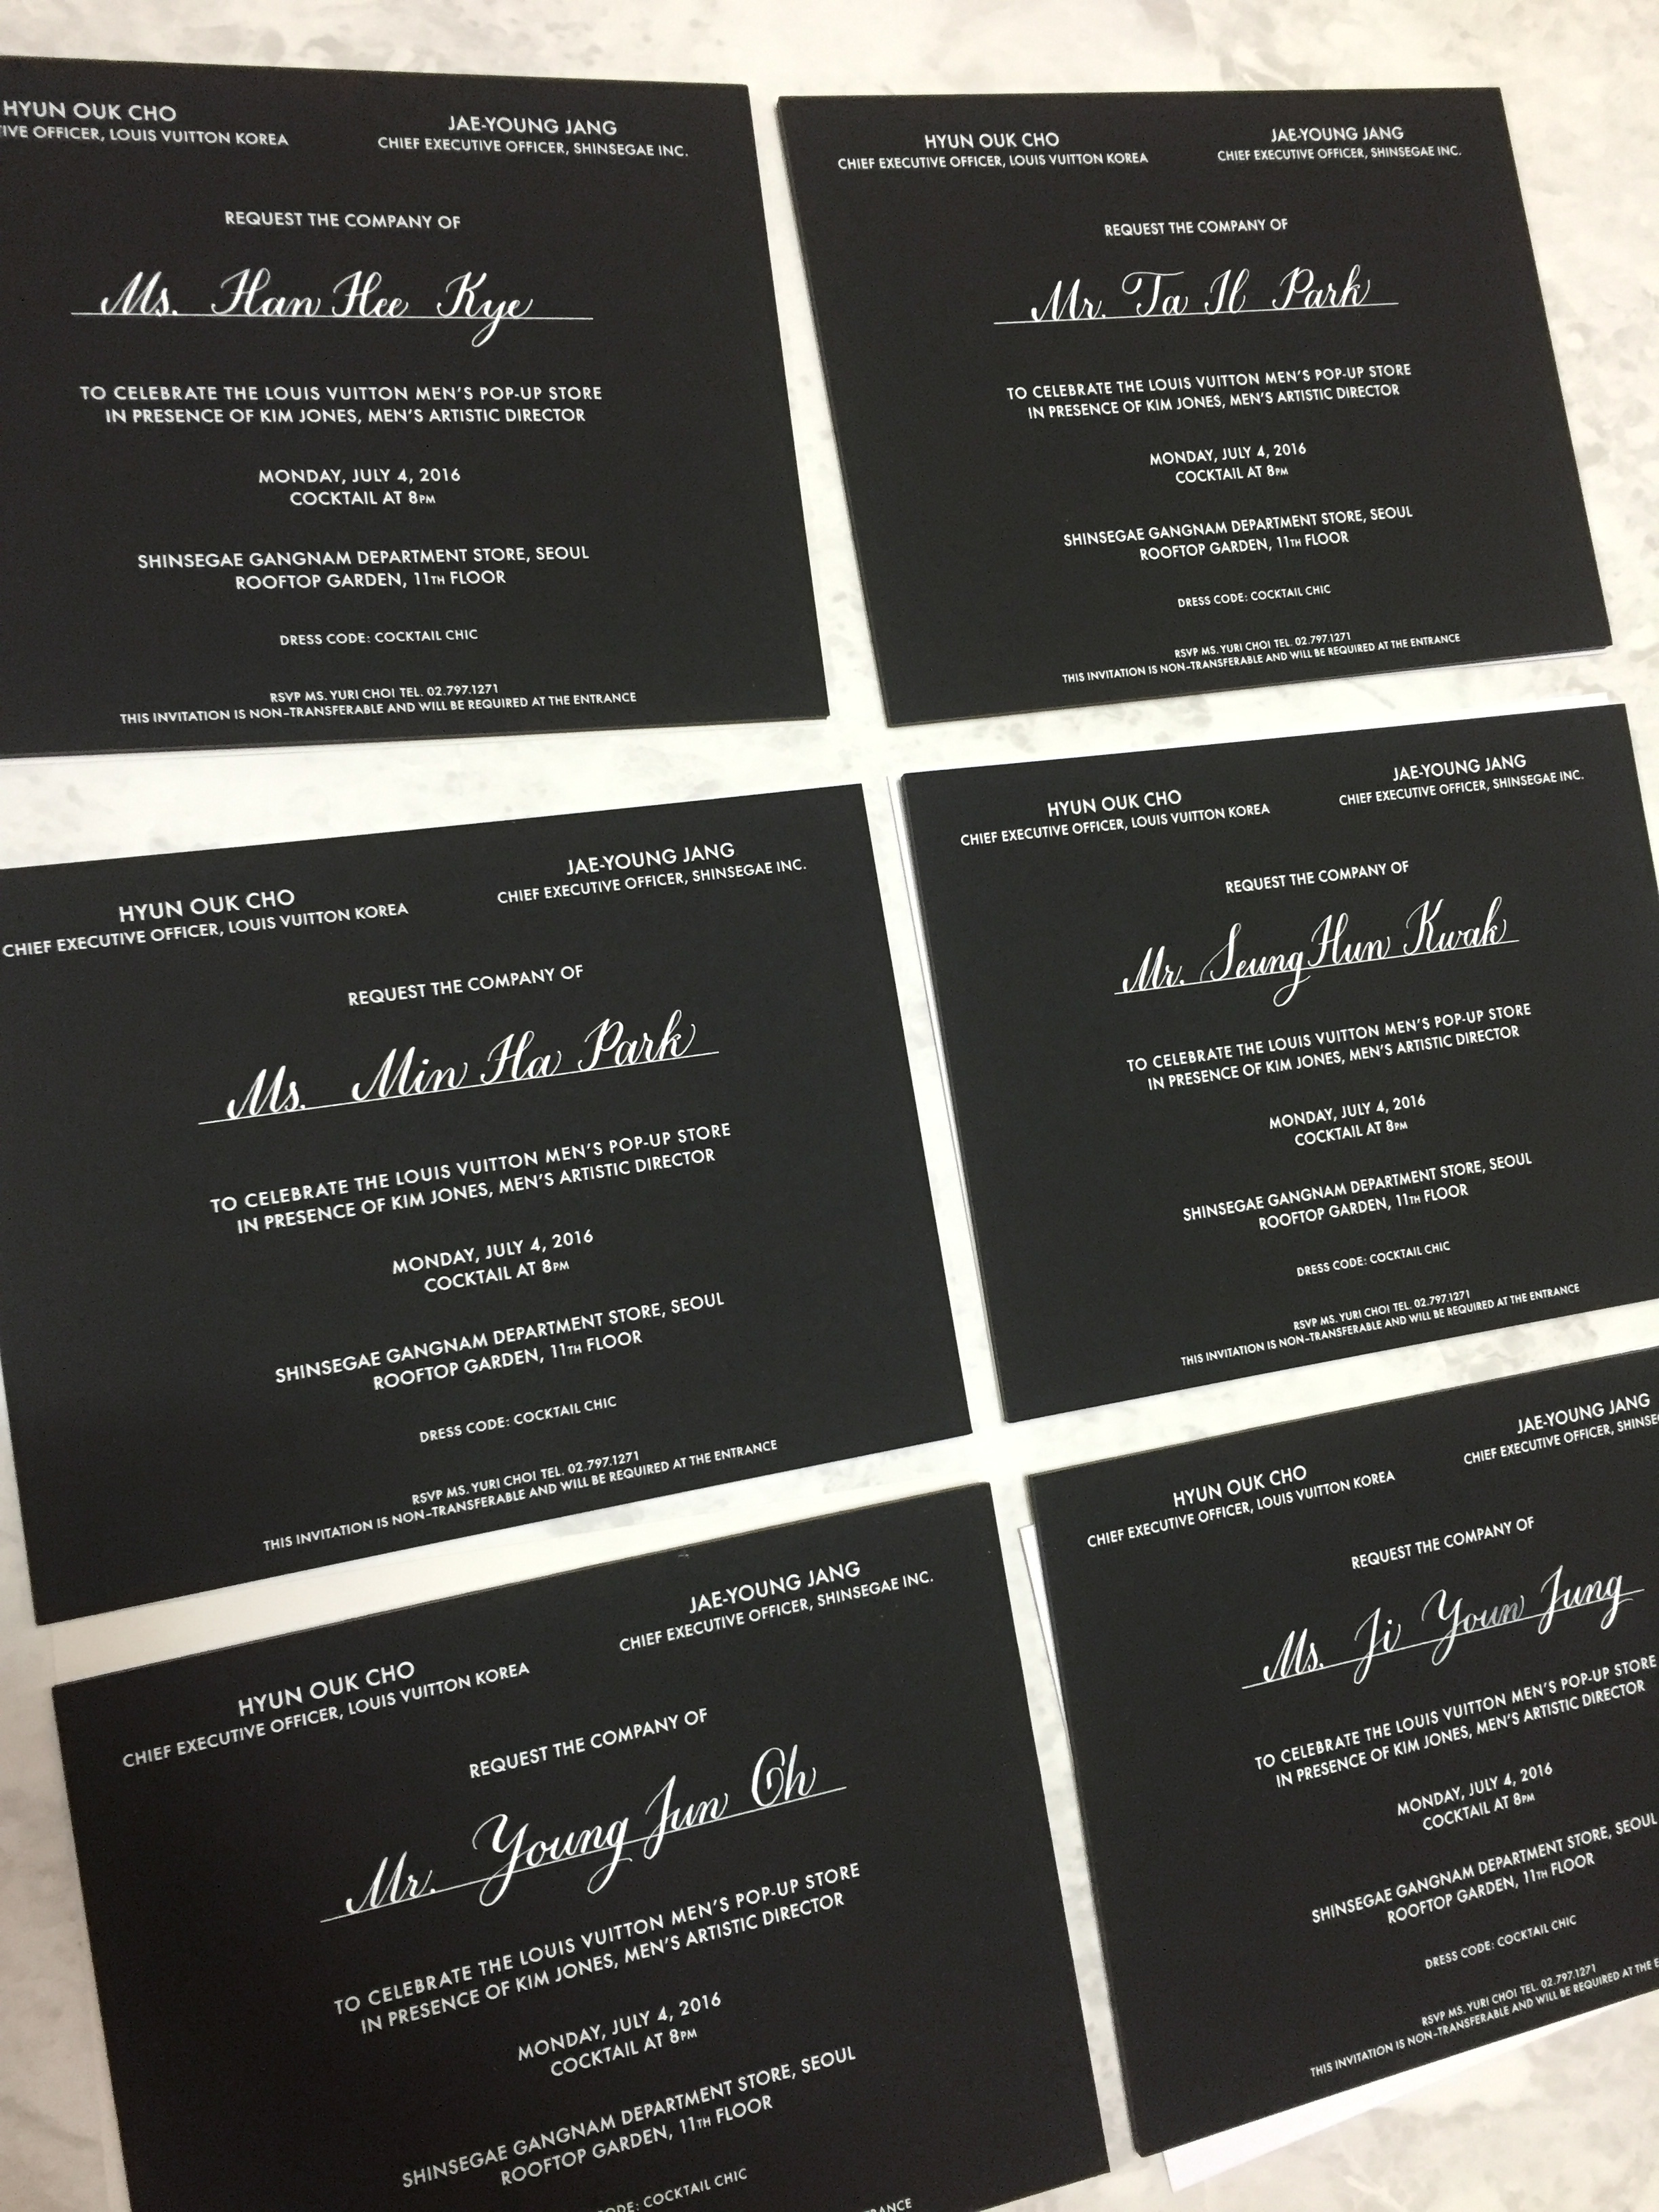 Louis Vuitton Invitations 